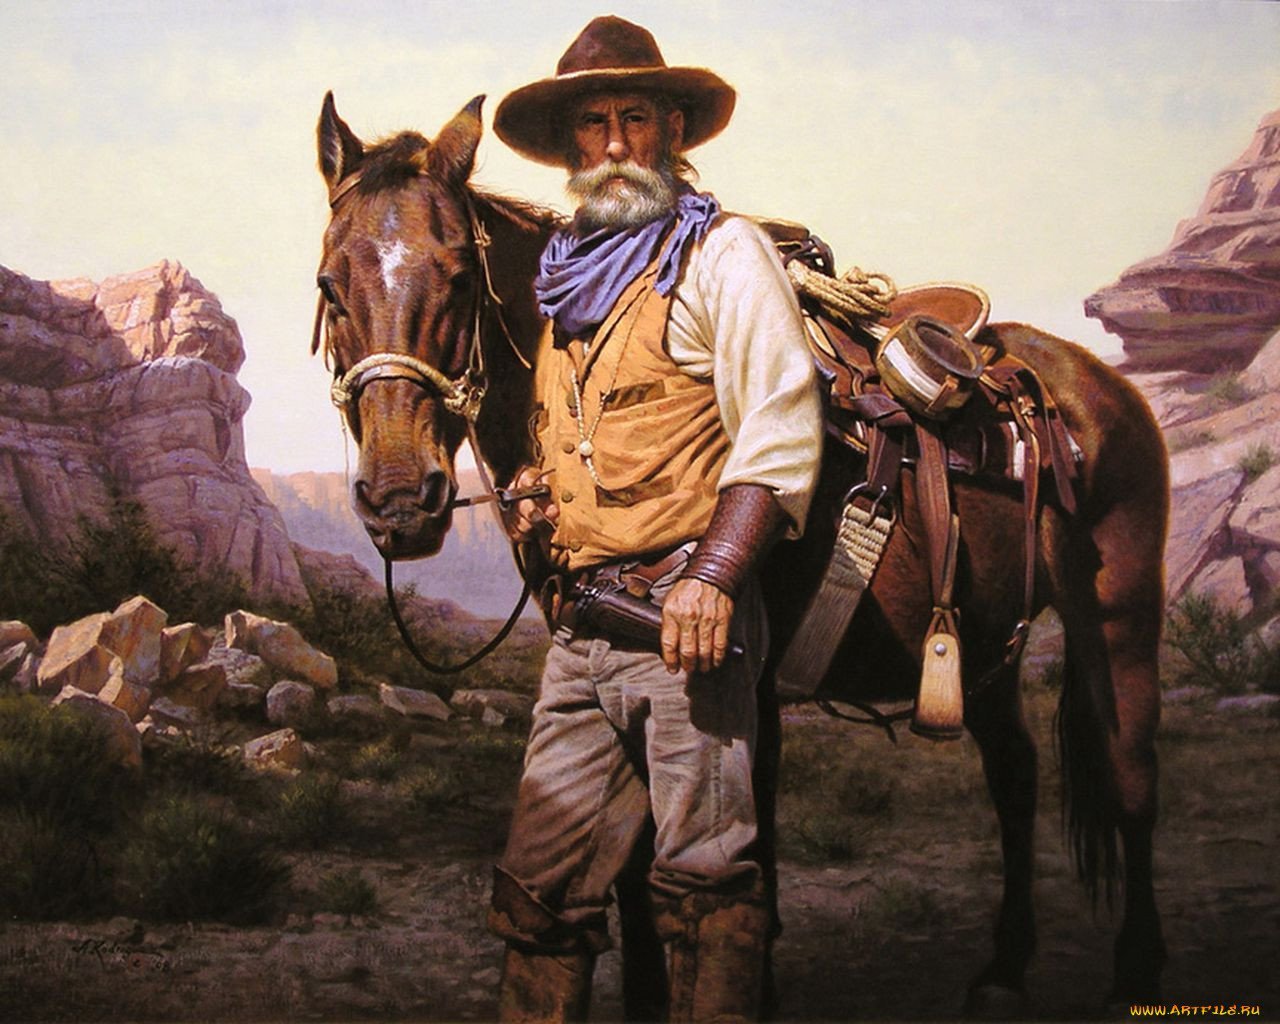 Best Indiana Jones Costume Ideas On Pinterest The Cowboy 3